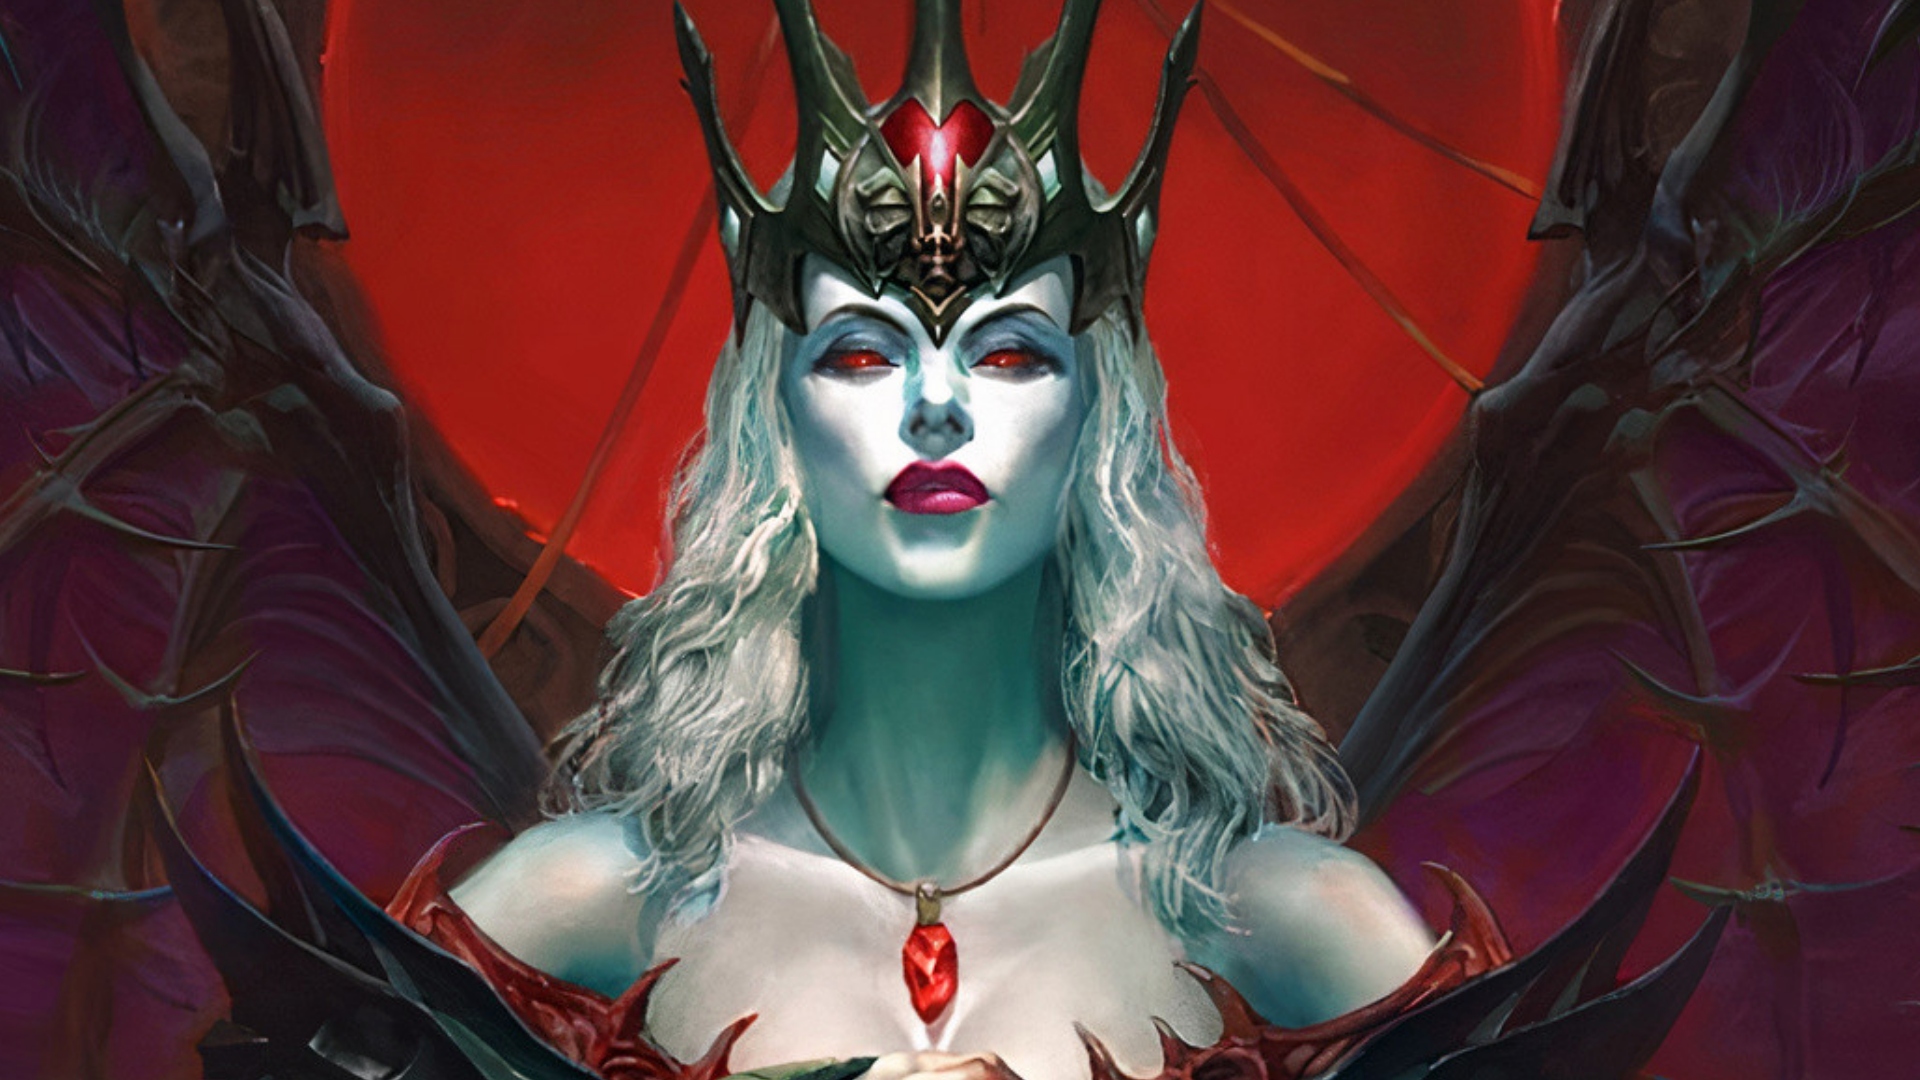 Diablo Immortal reveals Diablo as the slot machine it always was - Polygon